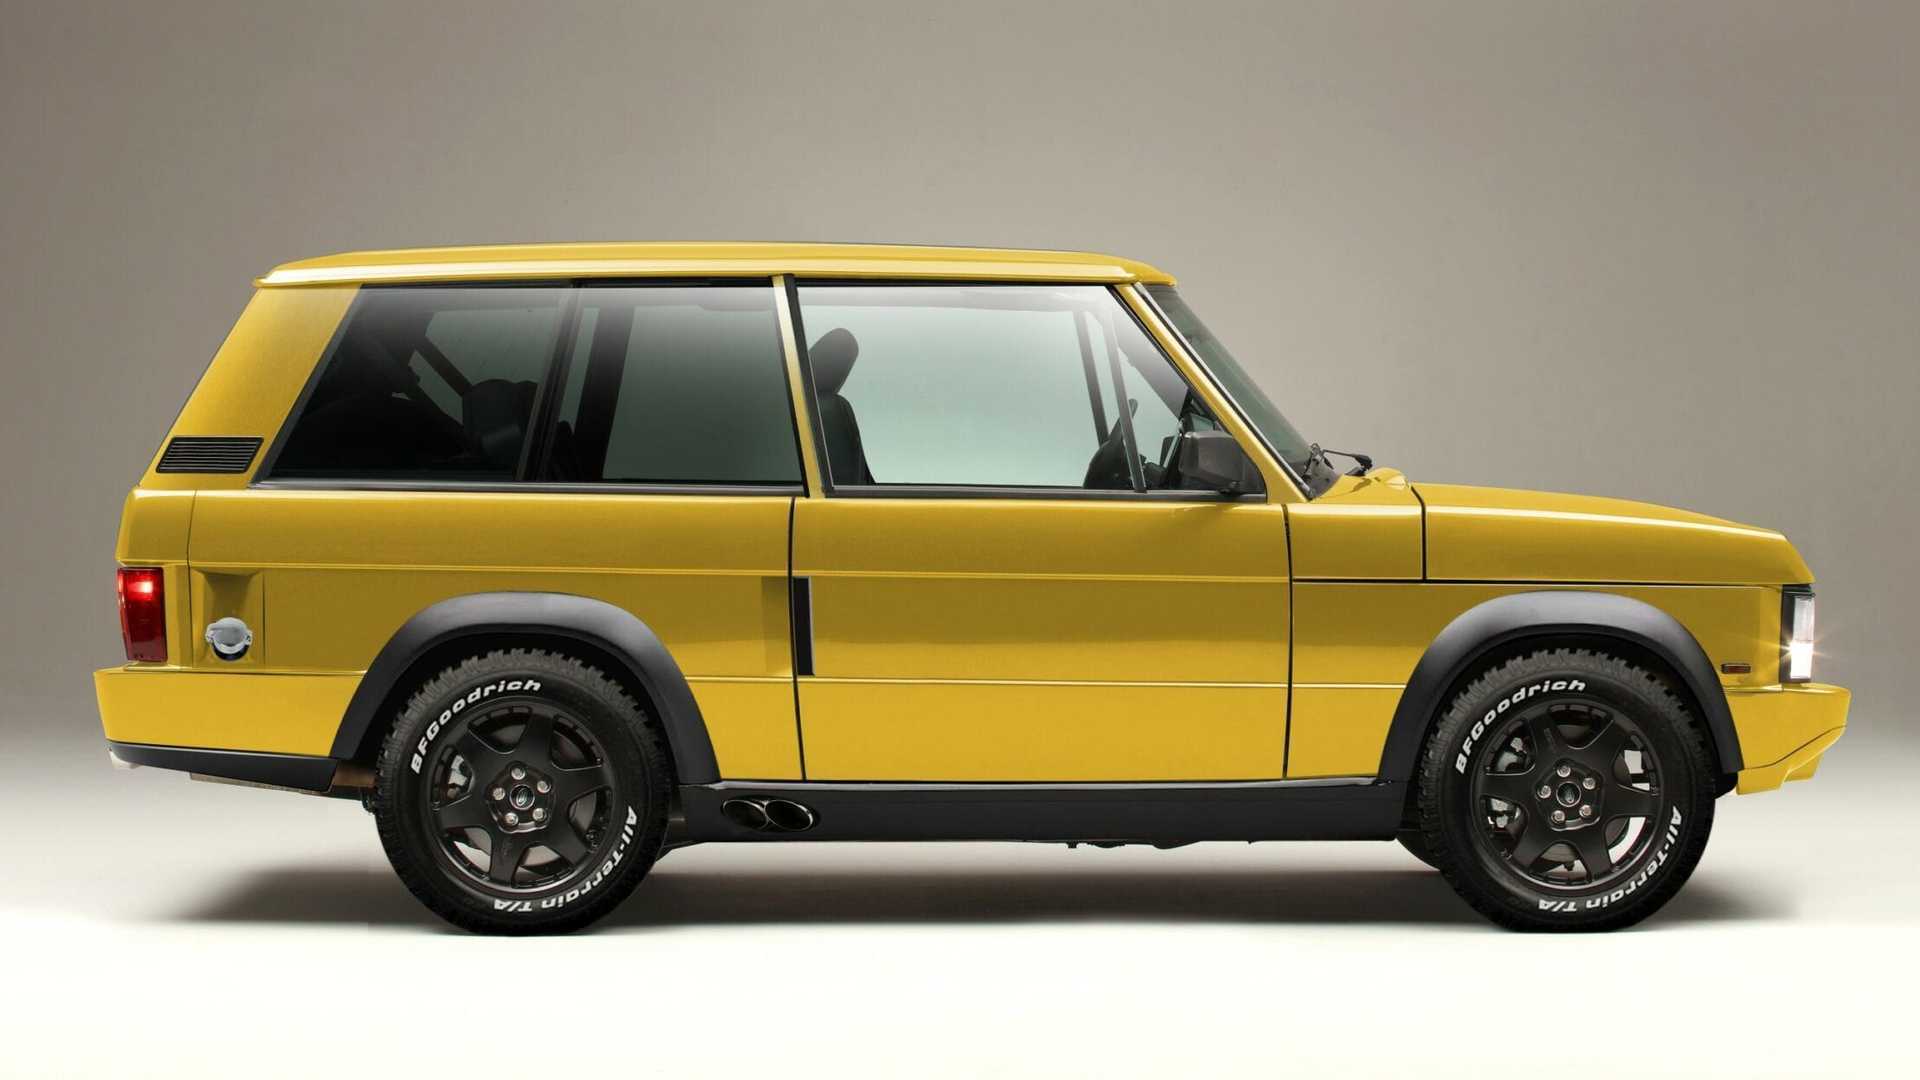 Chieftain Xtreme представляет собой глубокую модернизацию легендарного внедорожника Range Rover